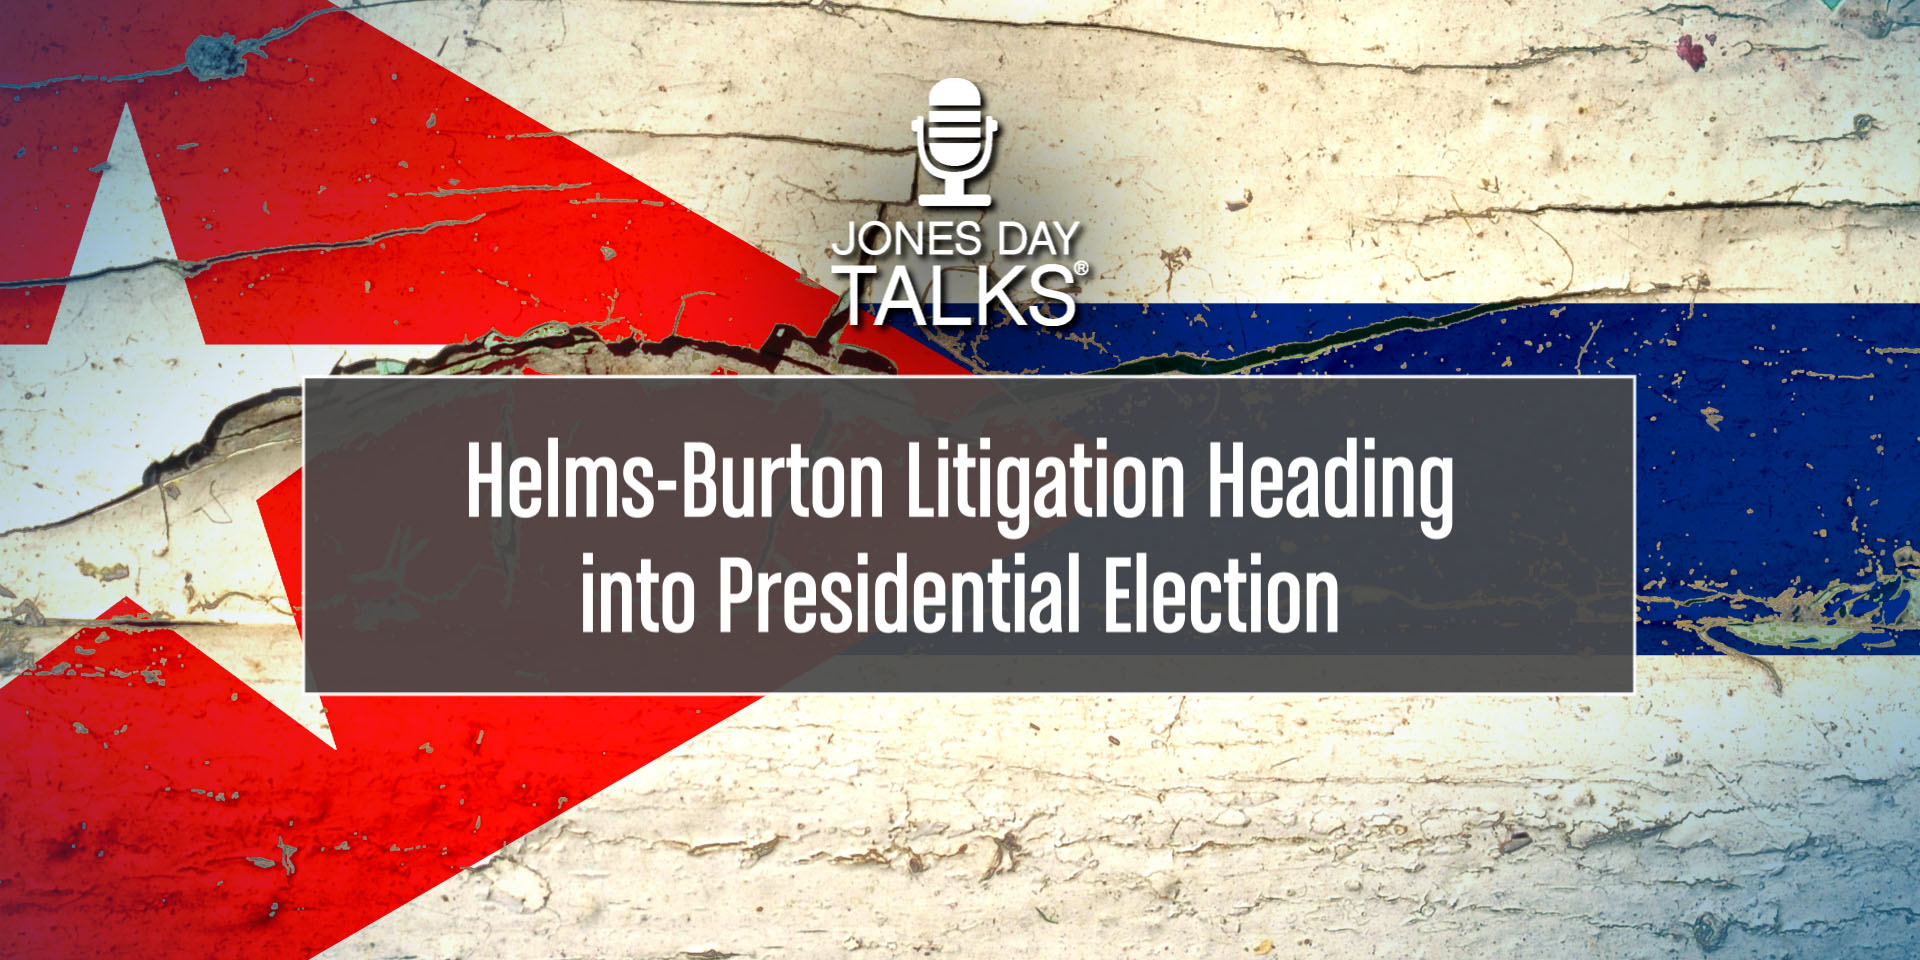 JONES DAY TALKS Helms Burton LitigationCROP